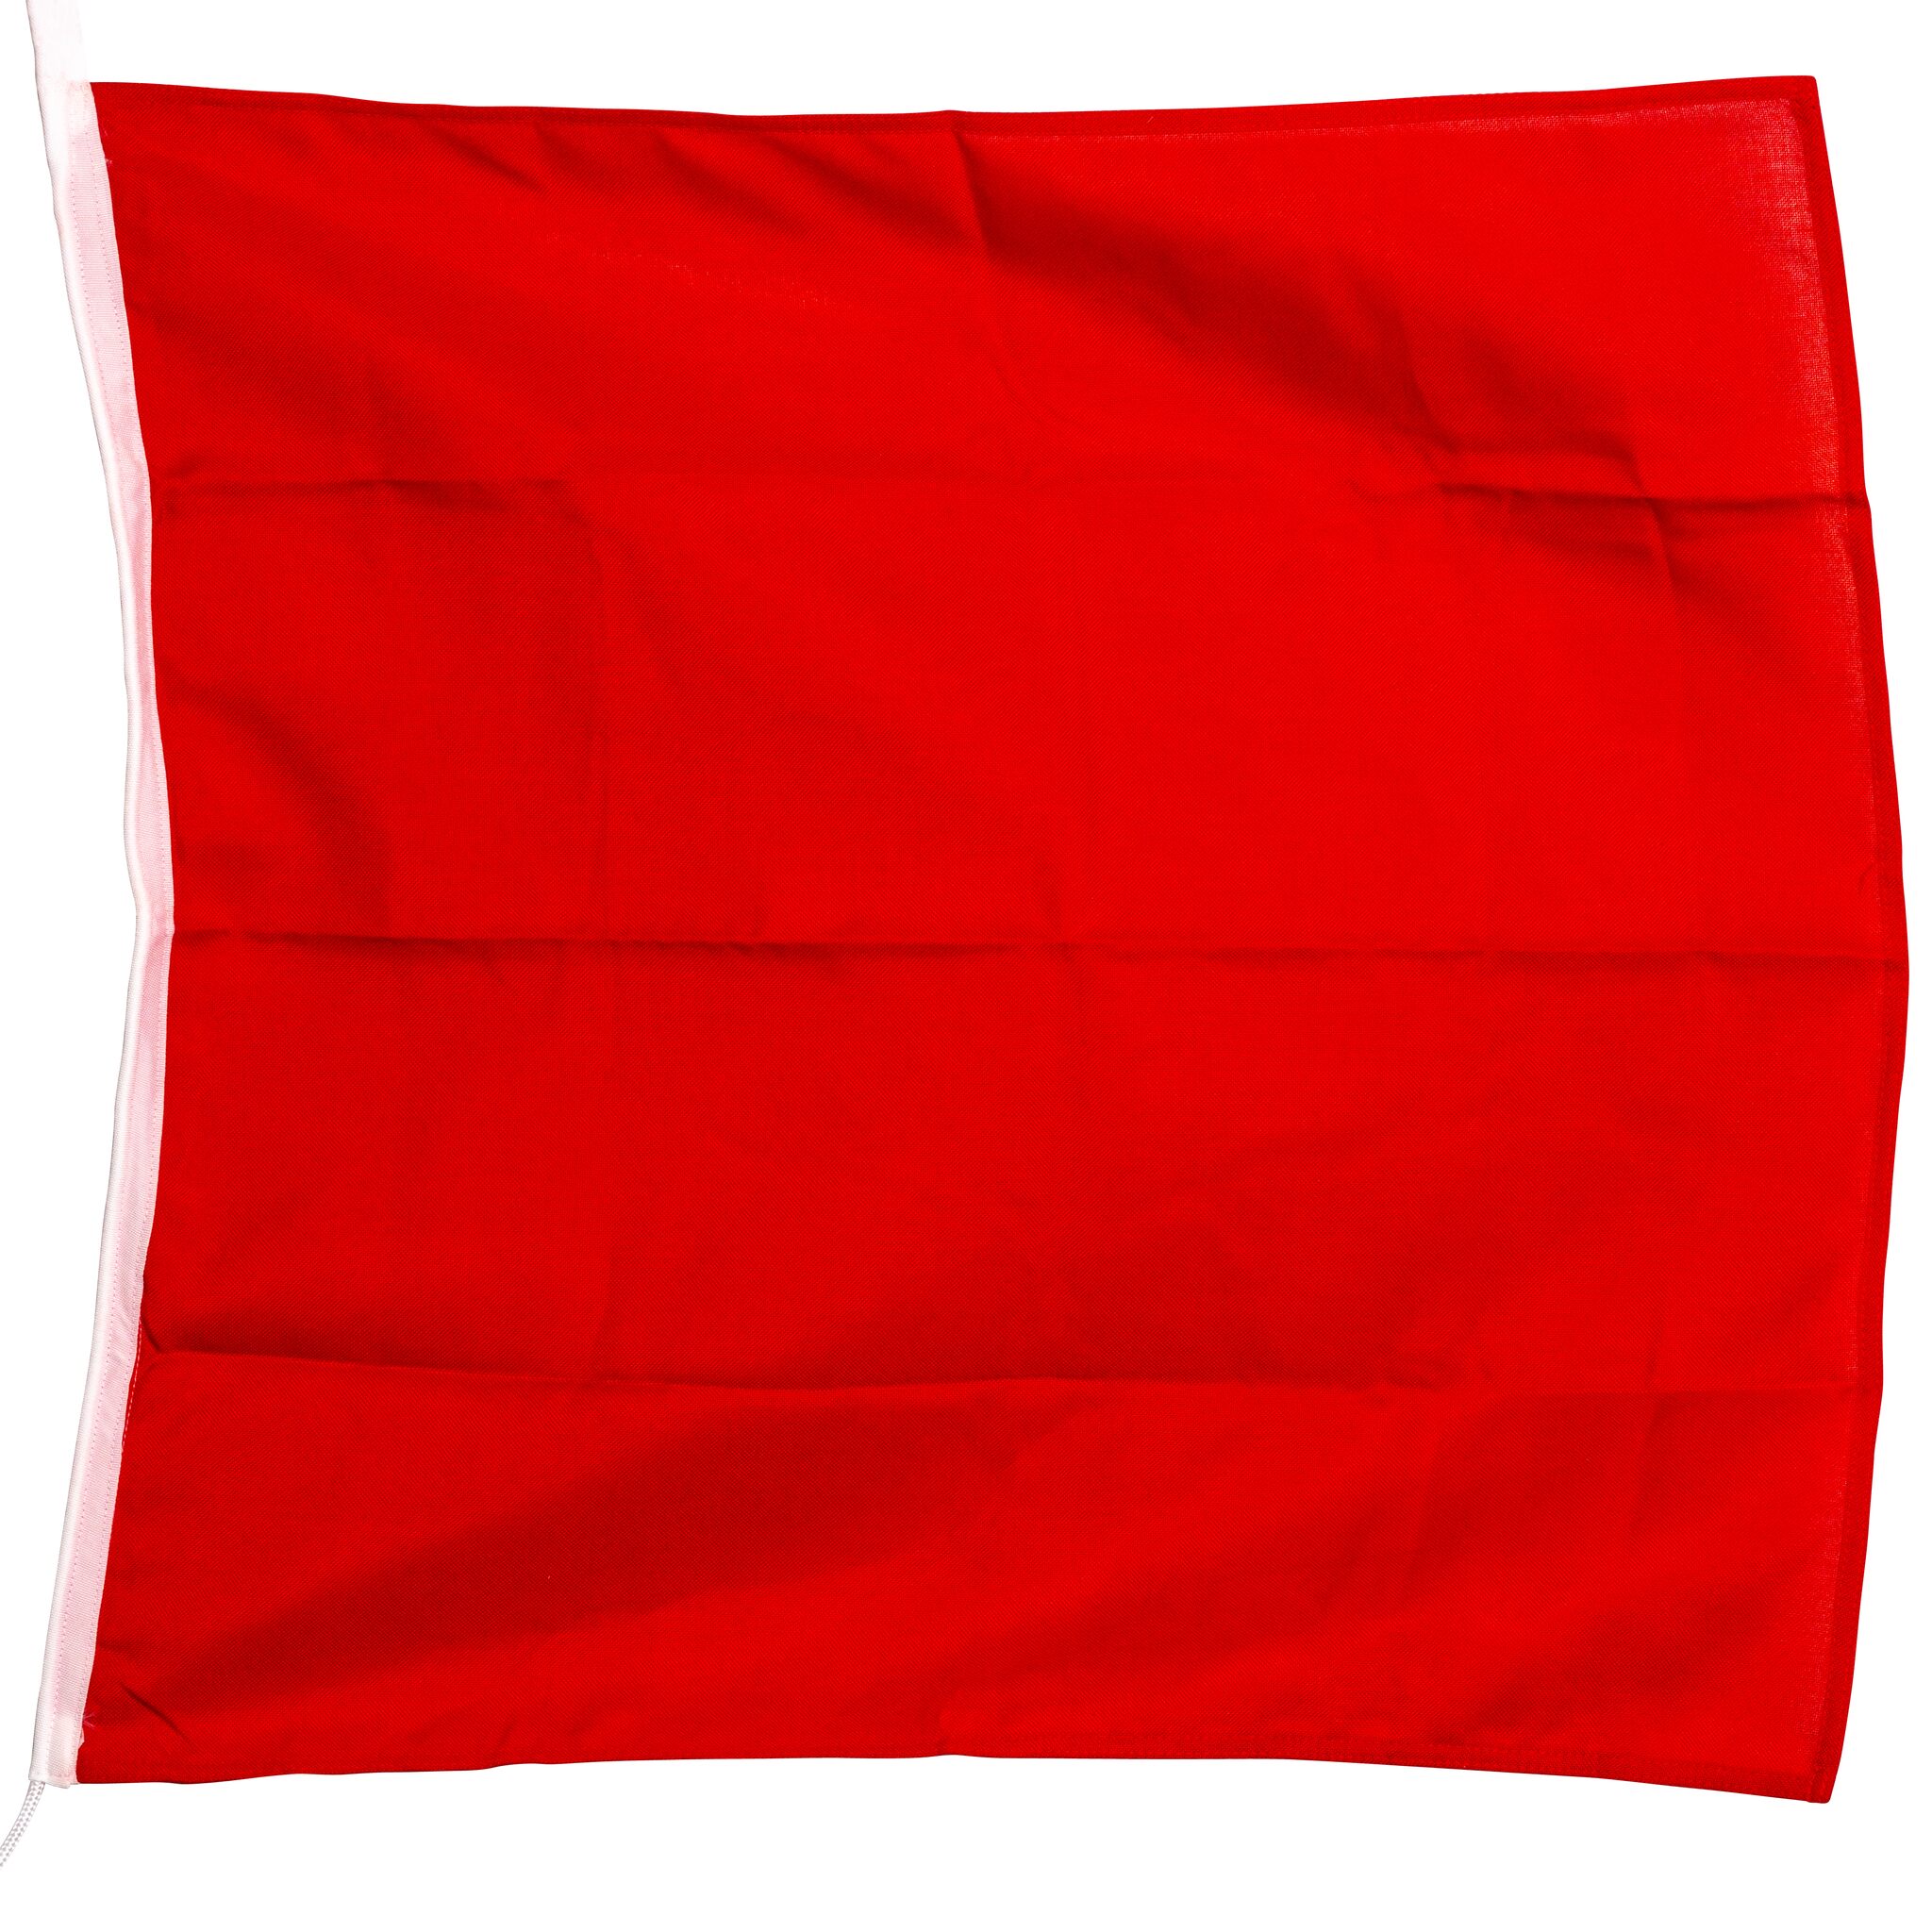 awn Notflagge (60 x 60 cm)